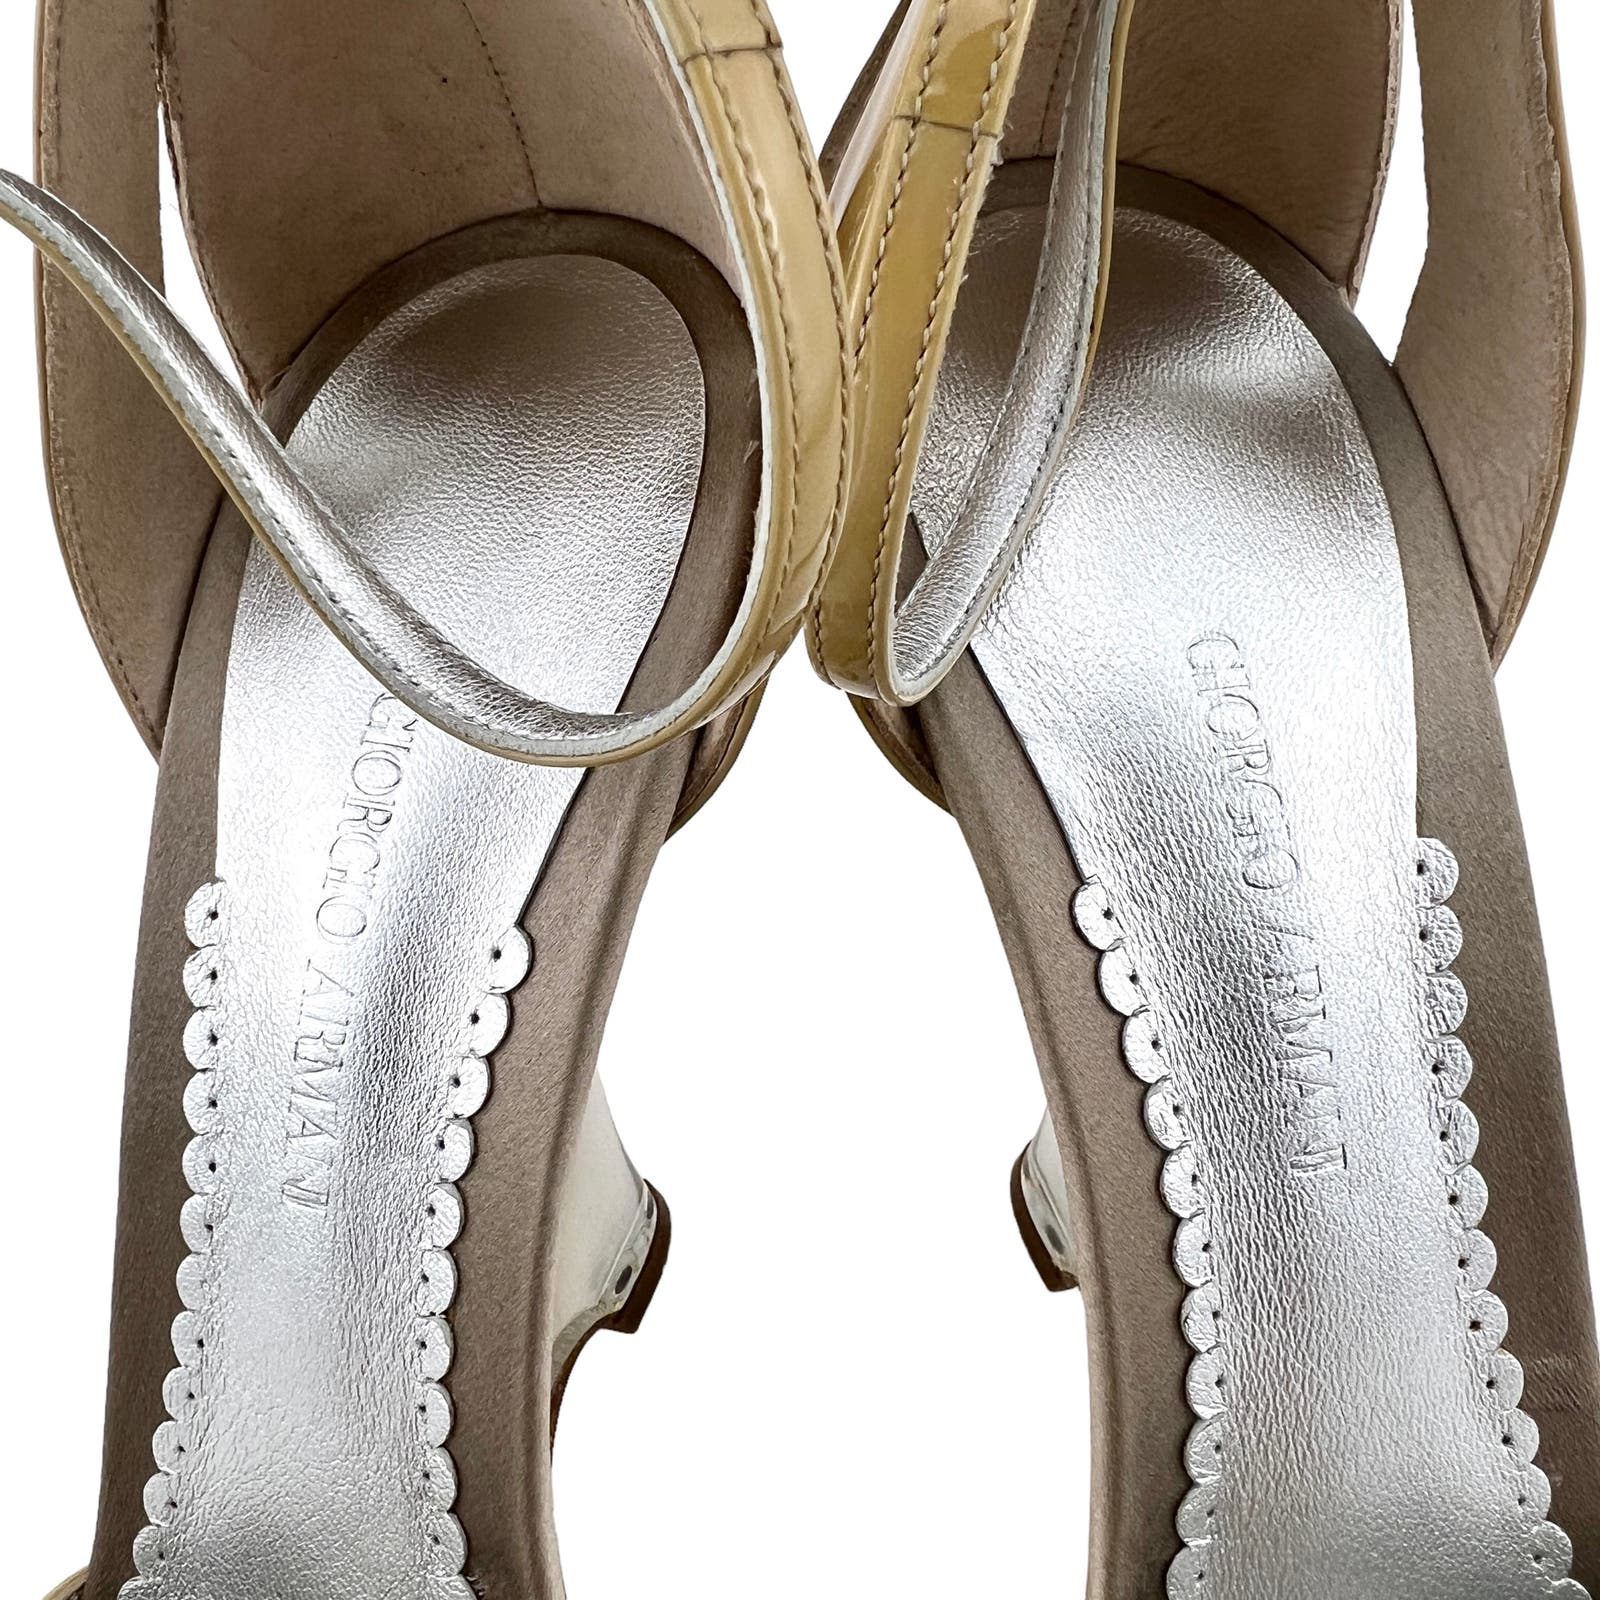 Giorgio Armani Women US 8.5-US 9.5 Leather Sandals - Mismatched Sizes!